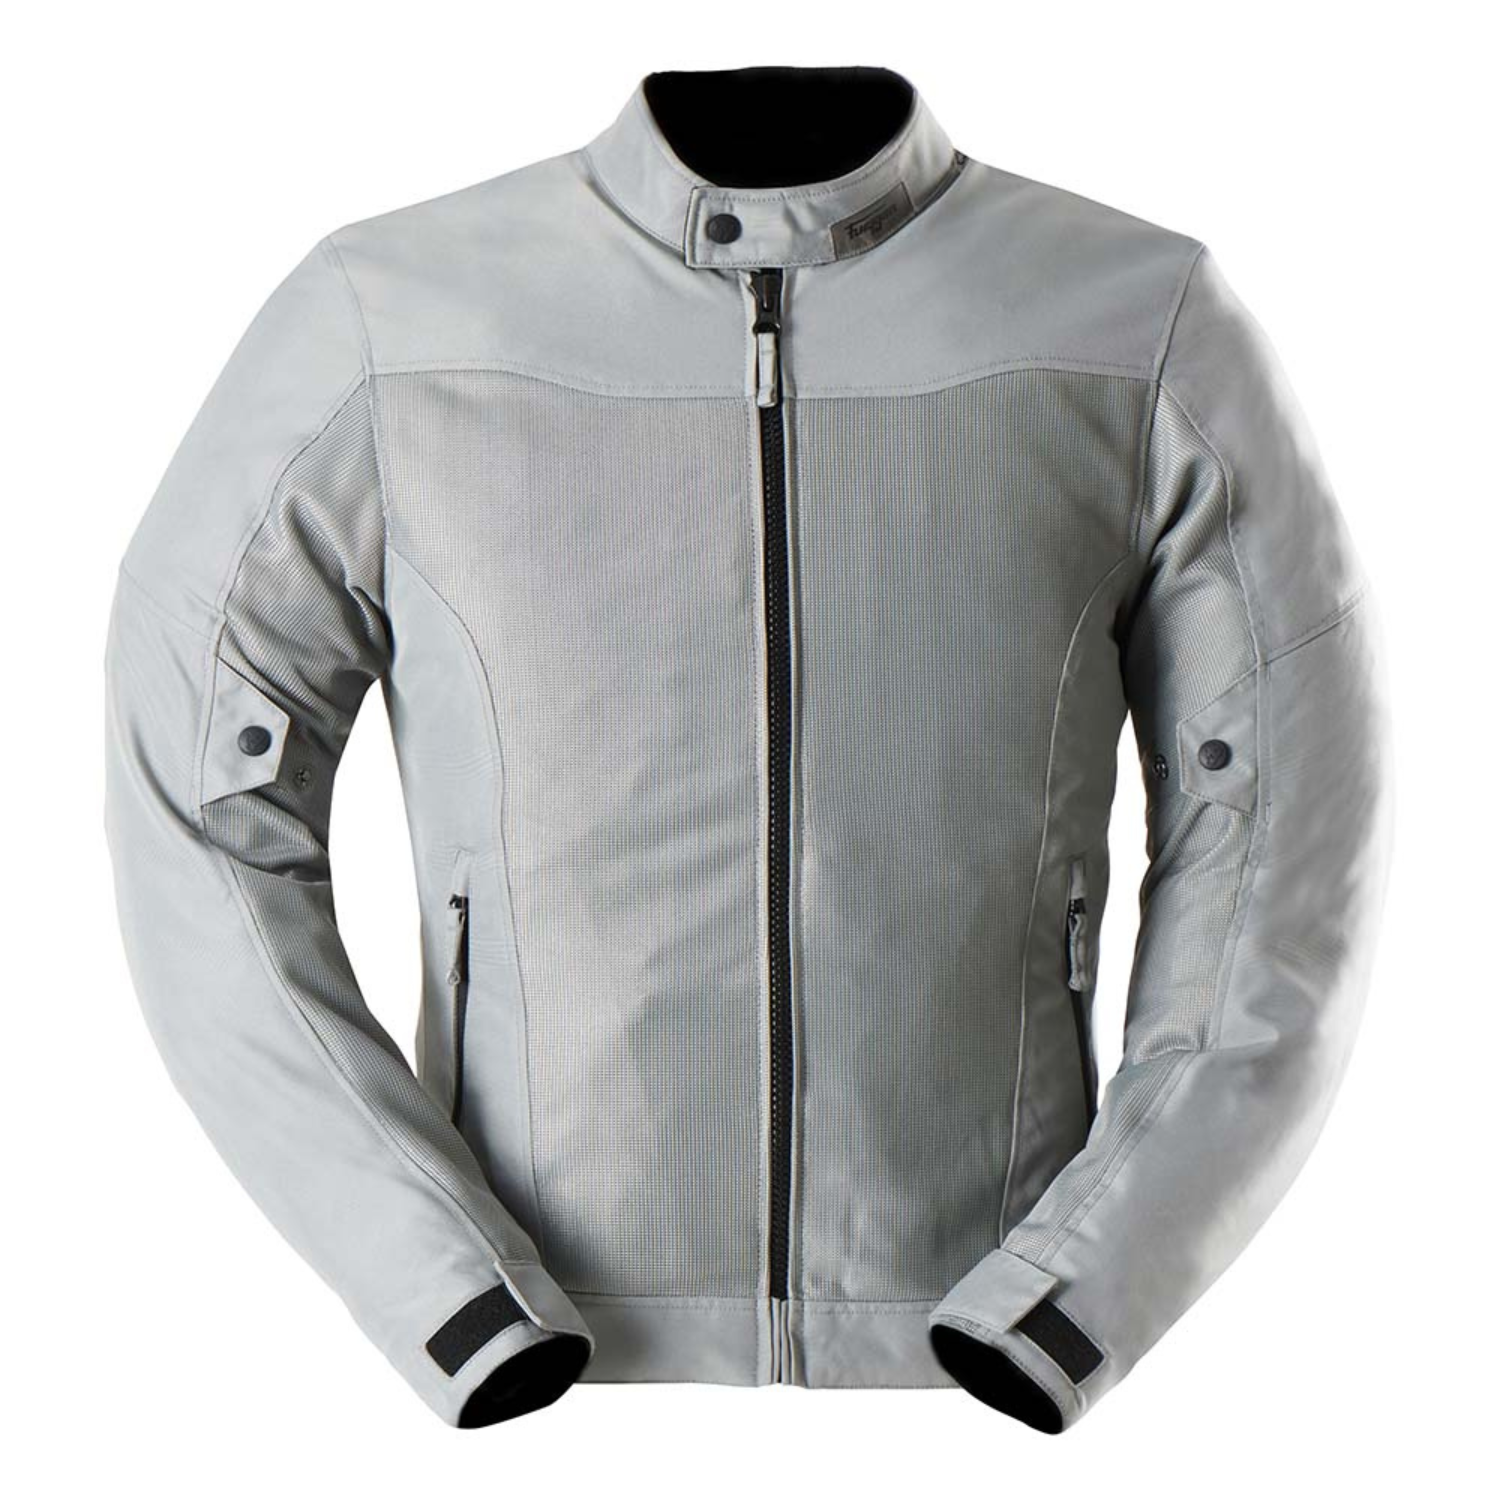 Image of Furygan Mistral Evo 3 Jacket Grey Size M EN